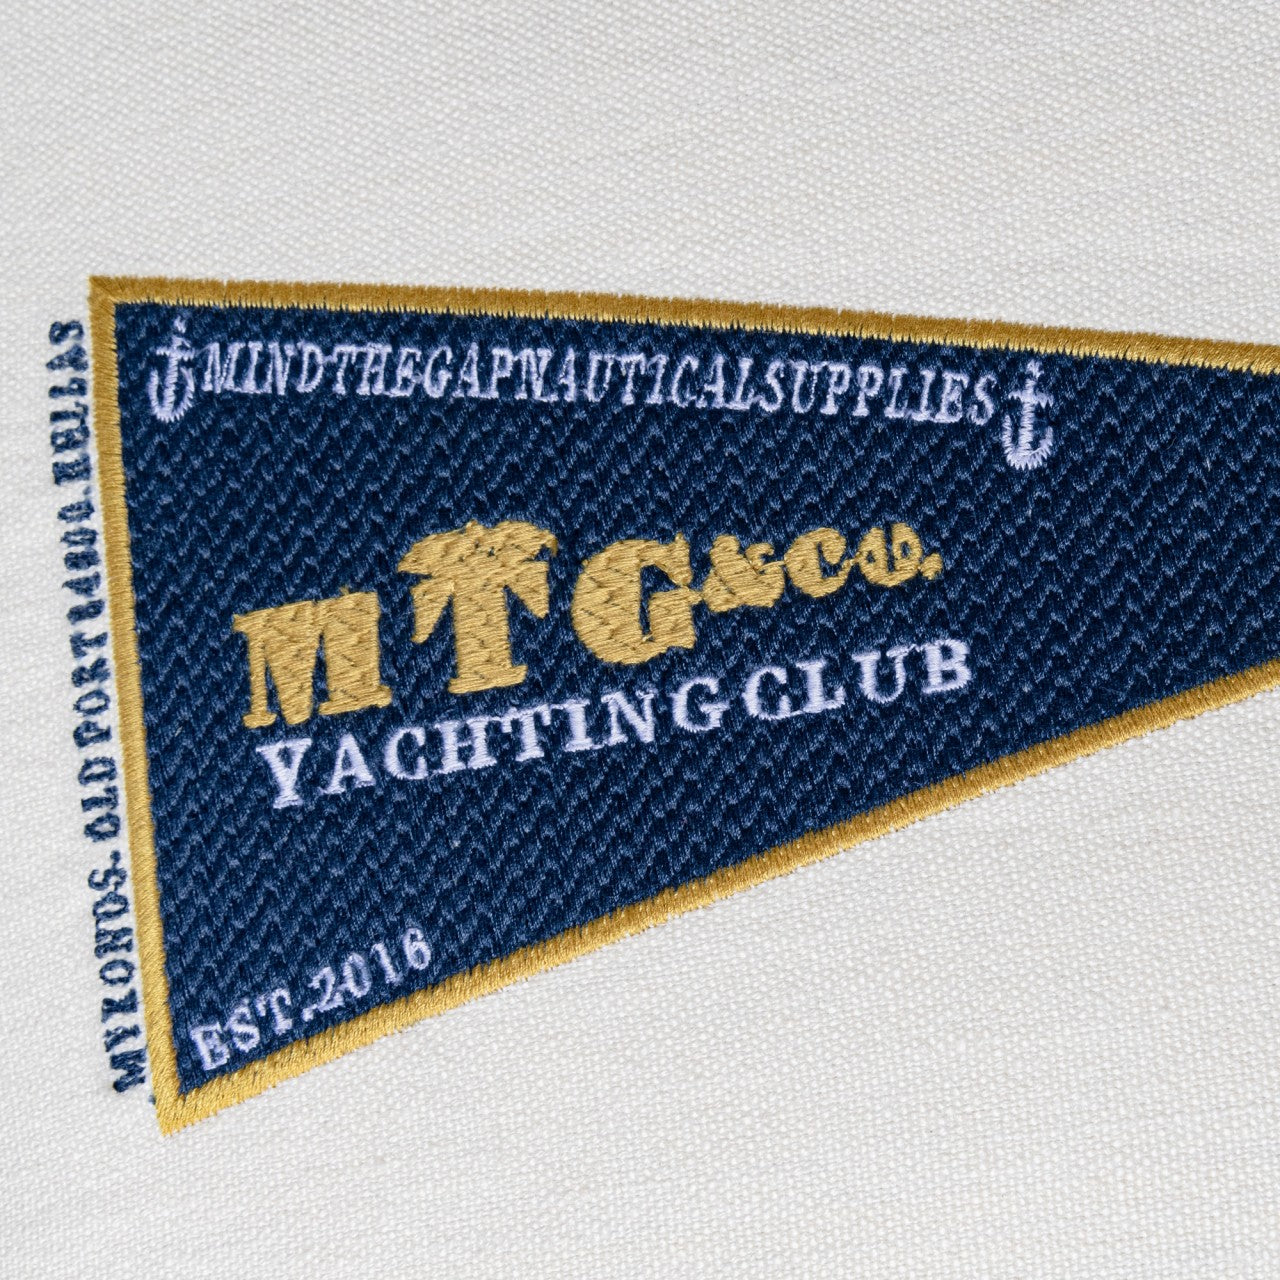 MTG YACHTING CLUB Linen Embroidered Cushion_Cushions_Mindthegap